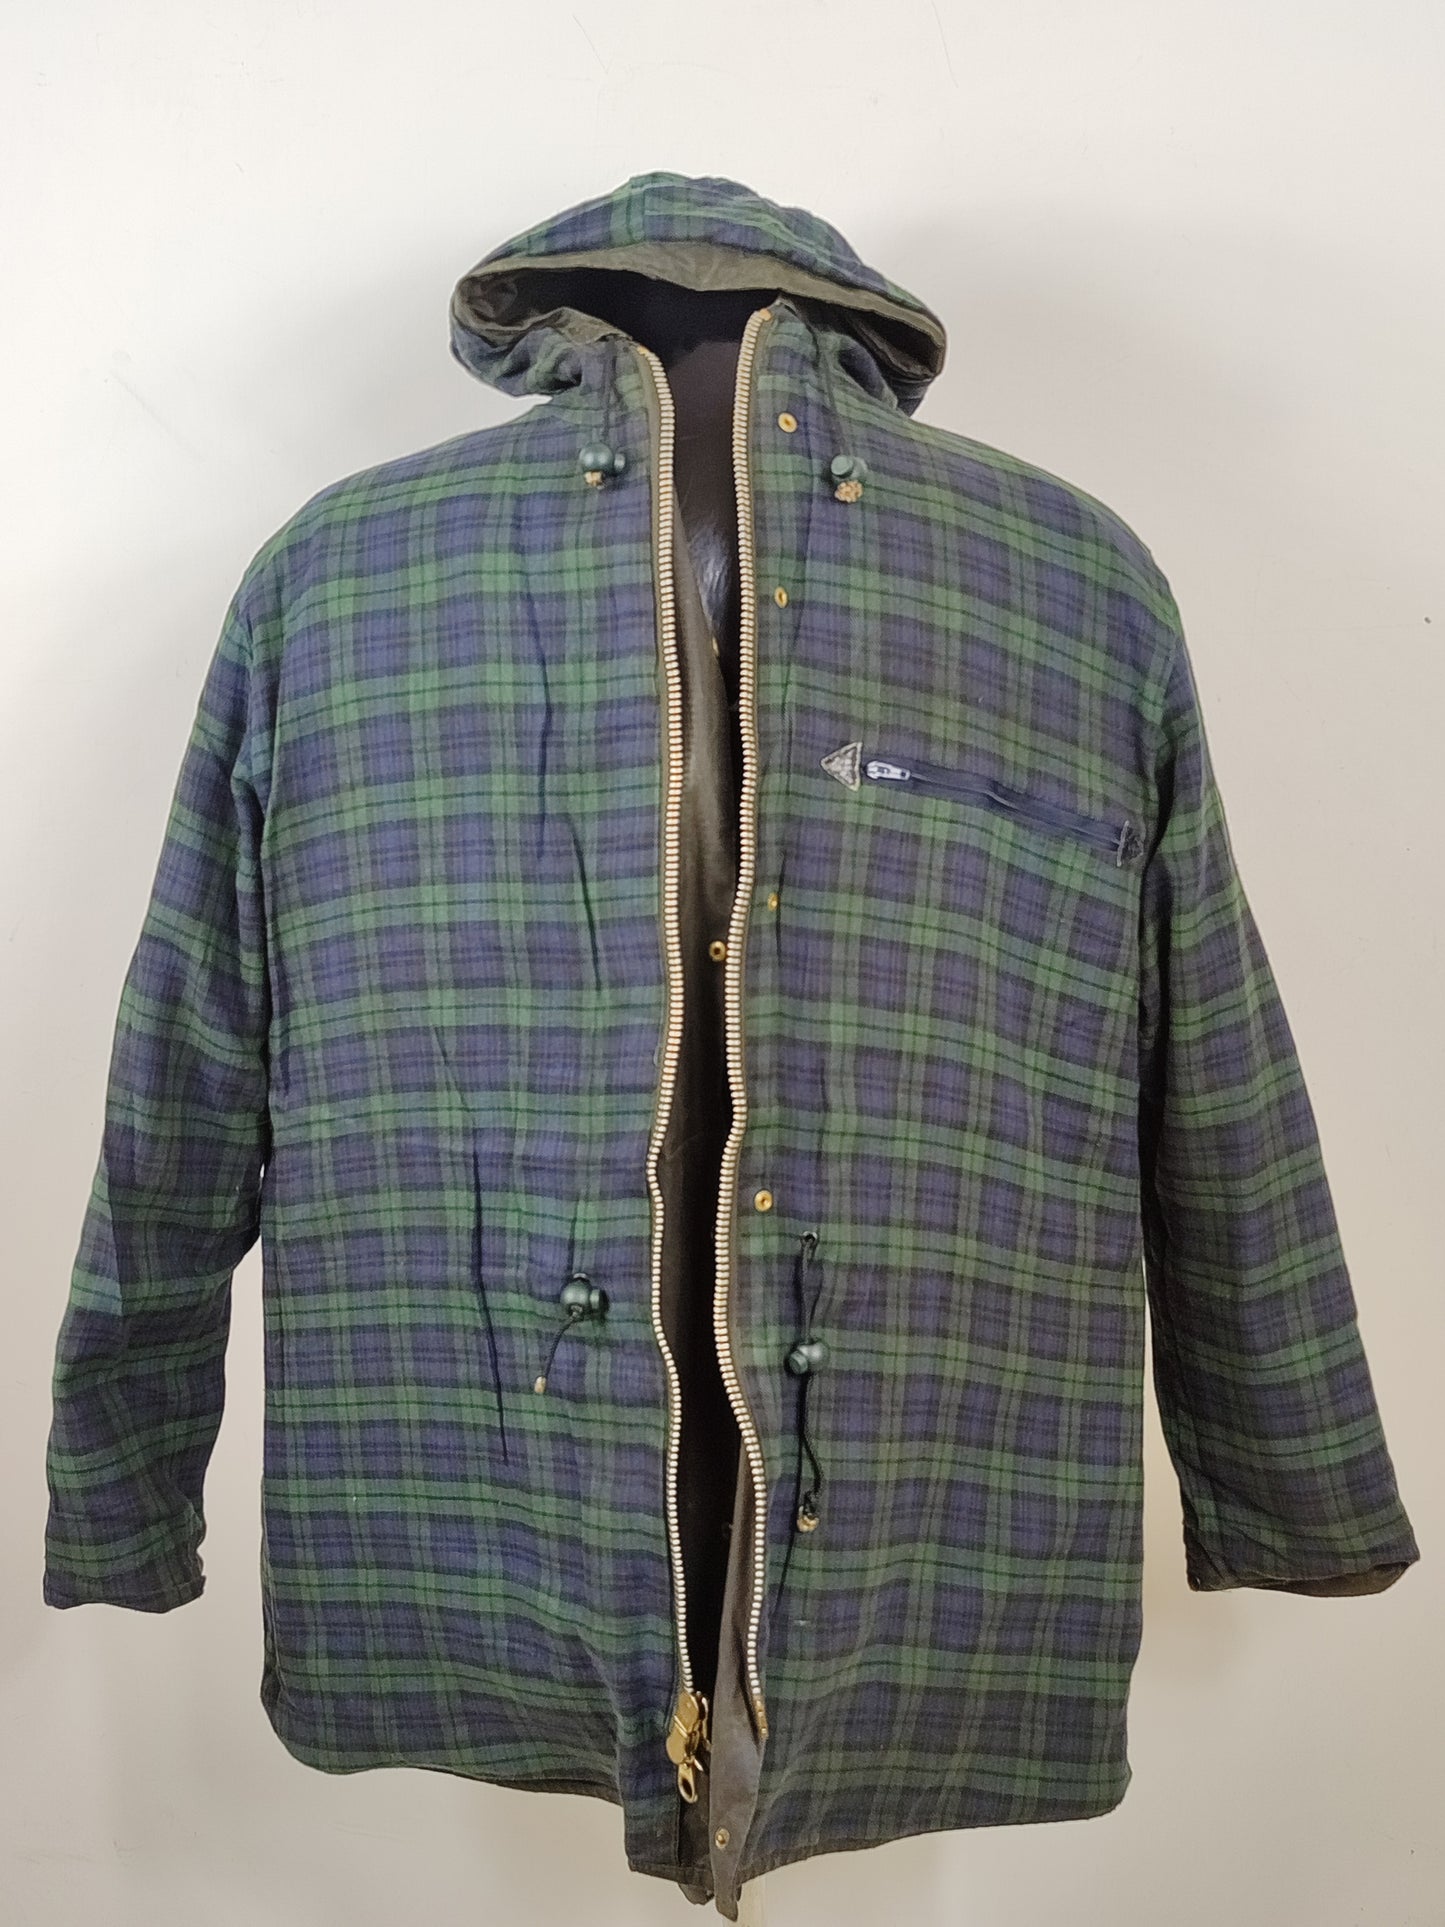 Giacca Barbour verde vintage Durham C40/102 cm- Waxed Durham green jacket Size M